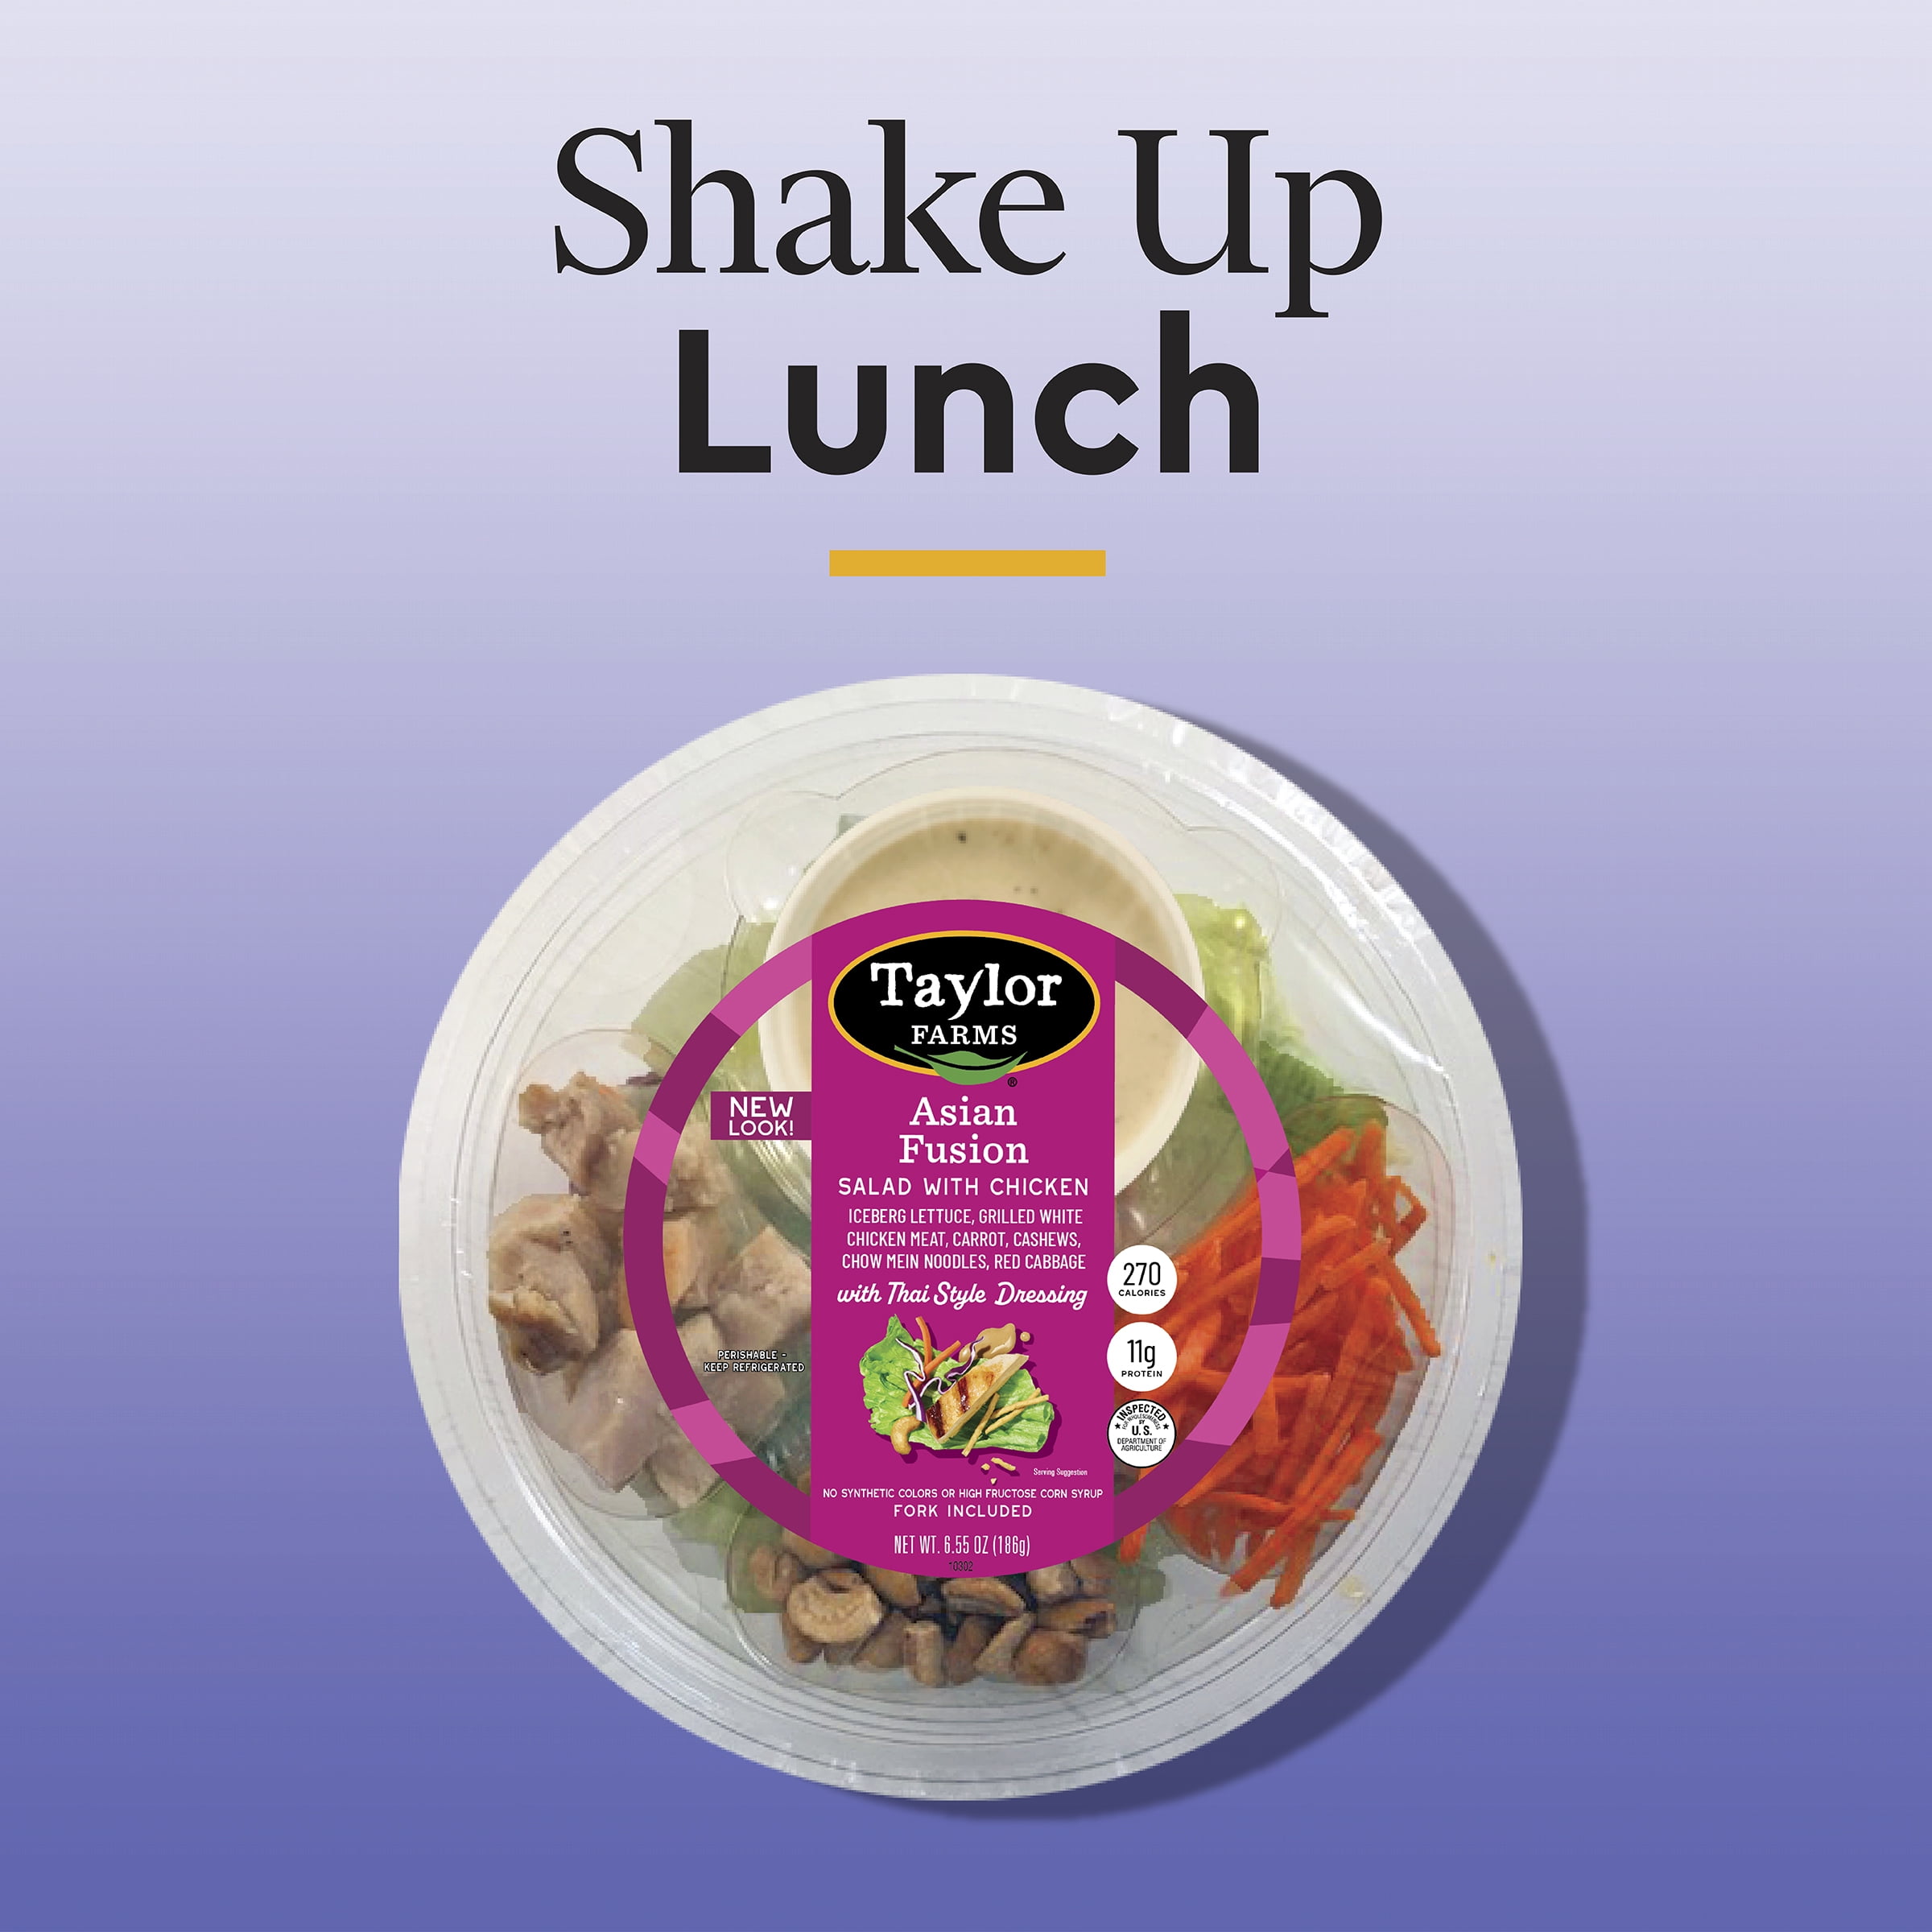 Taylor Farms® Introduces New On-The-Go Salad Bowls